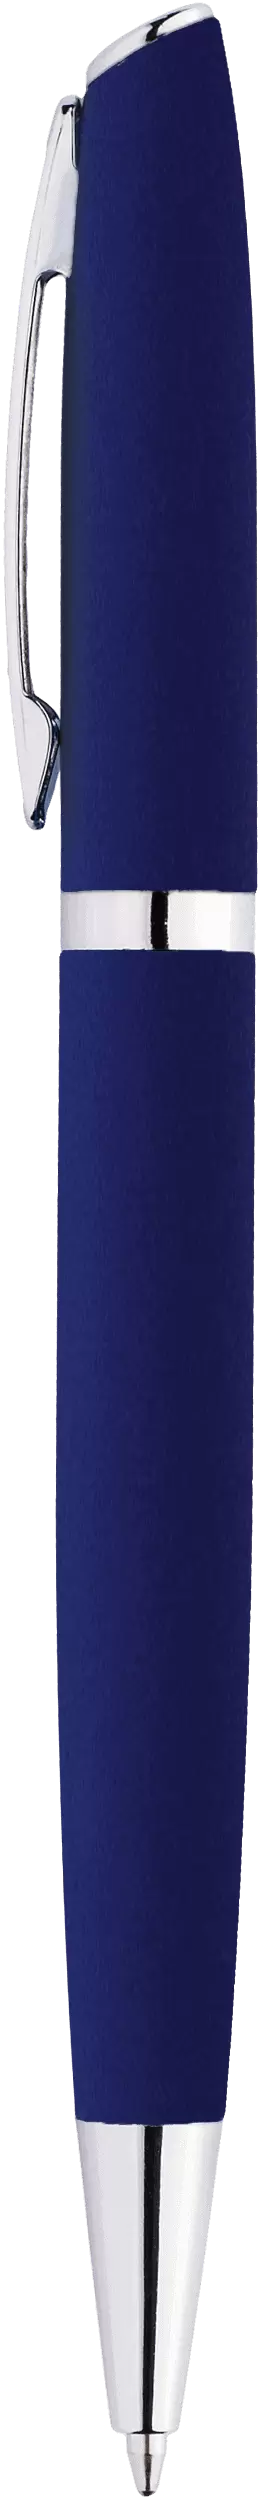 Ручка VESTA SOFT Темно-синяя 1121-14